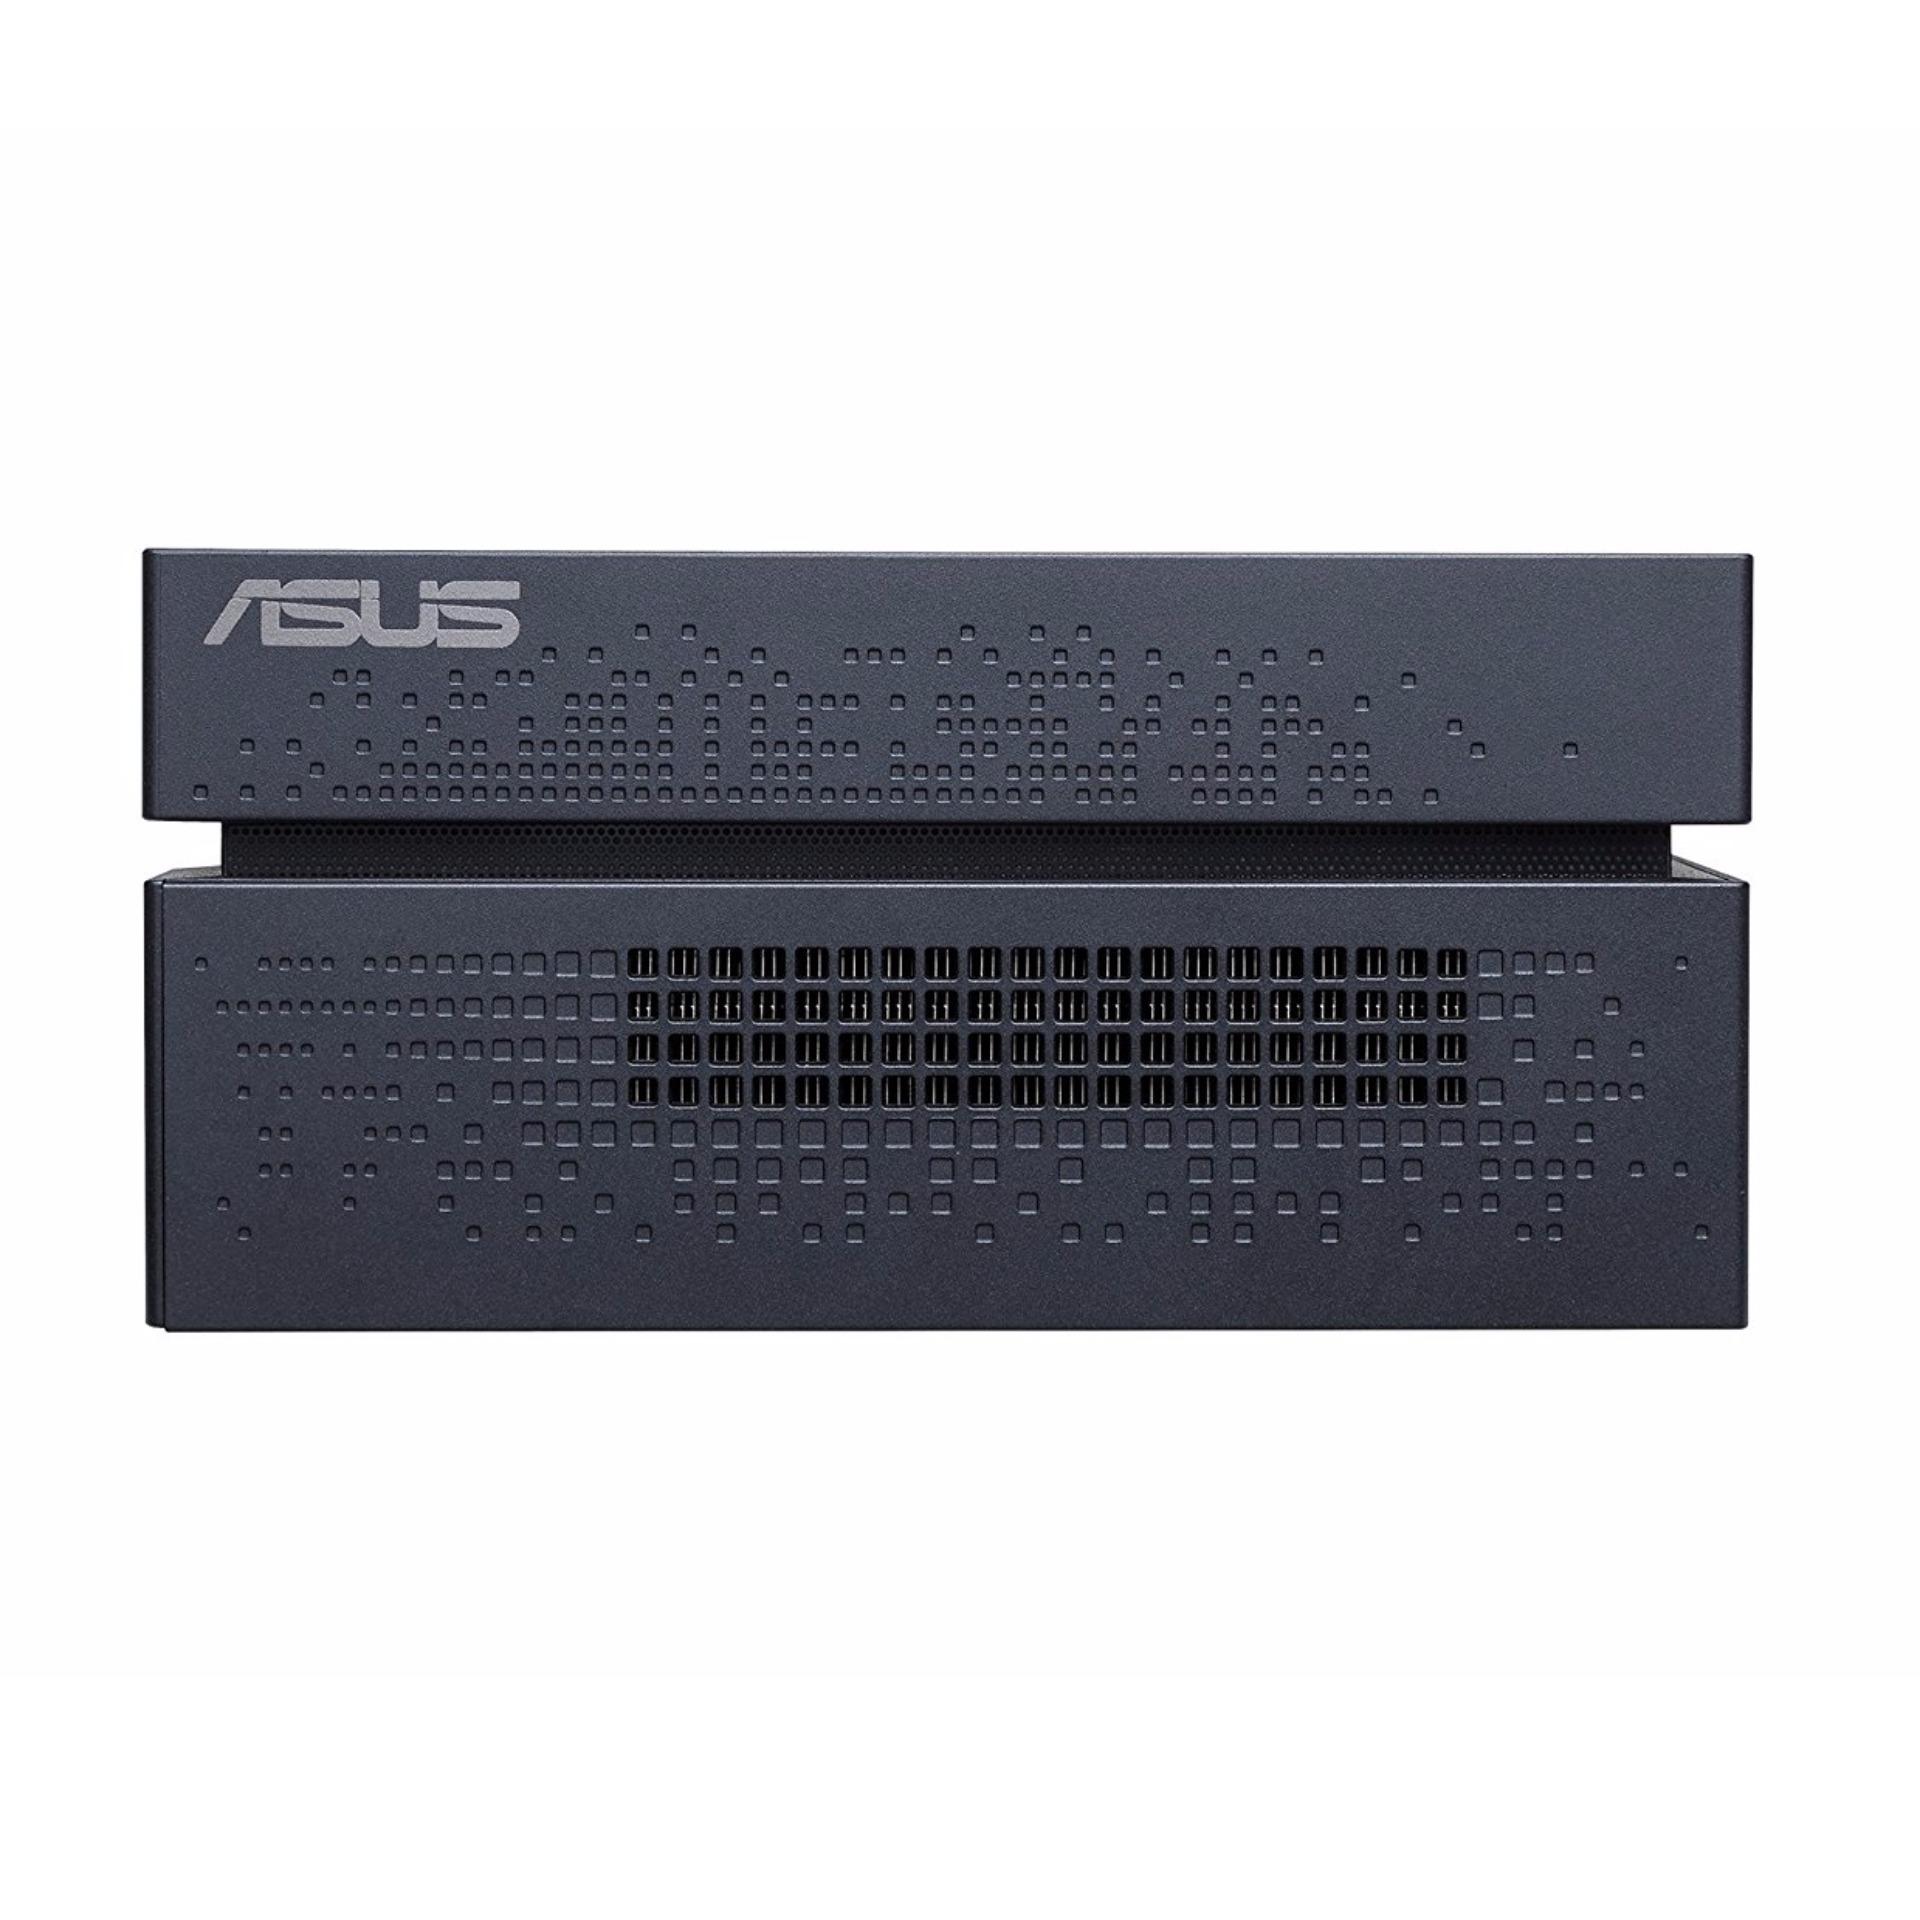 ASUS VC66-B137Z VivoMini VC66 Intel Core i7-7700 Quad-Core Mini Desktop Computer (VC66-B137Z) (Local Distributor Stocks / Brough to you by...